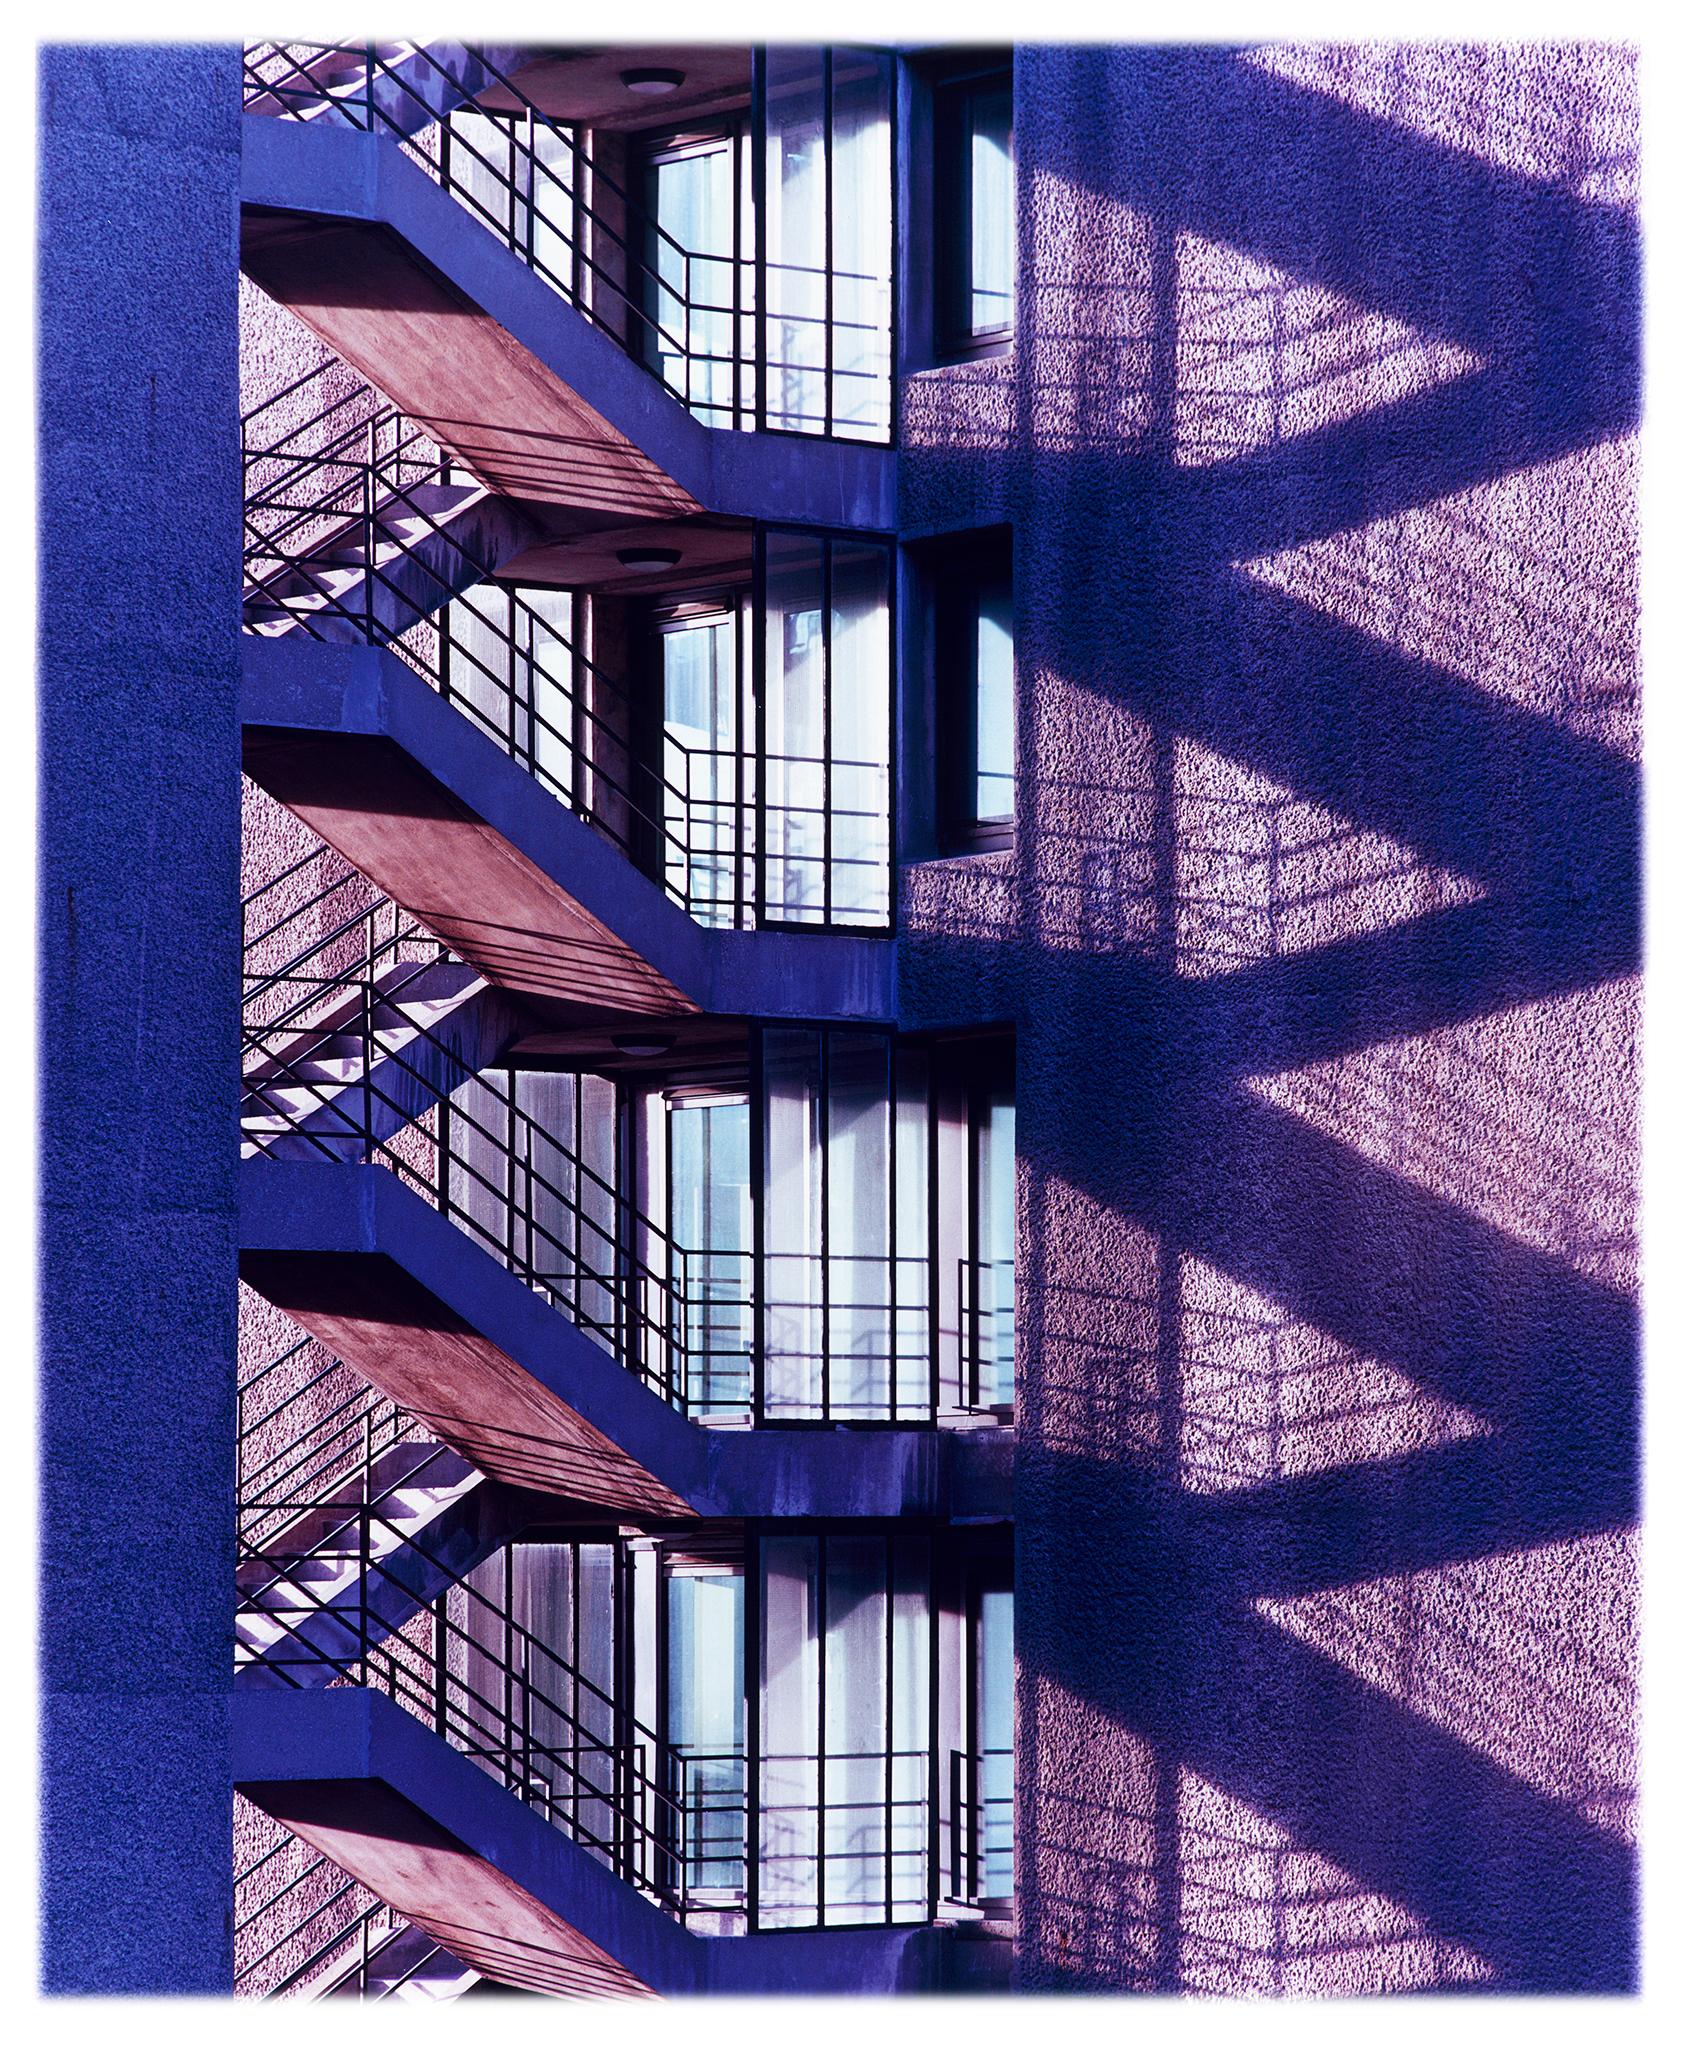 Richard Heeps Color Photograph - Brutalist Symphony II, London - Conceptual, architectural, color photography